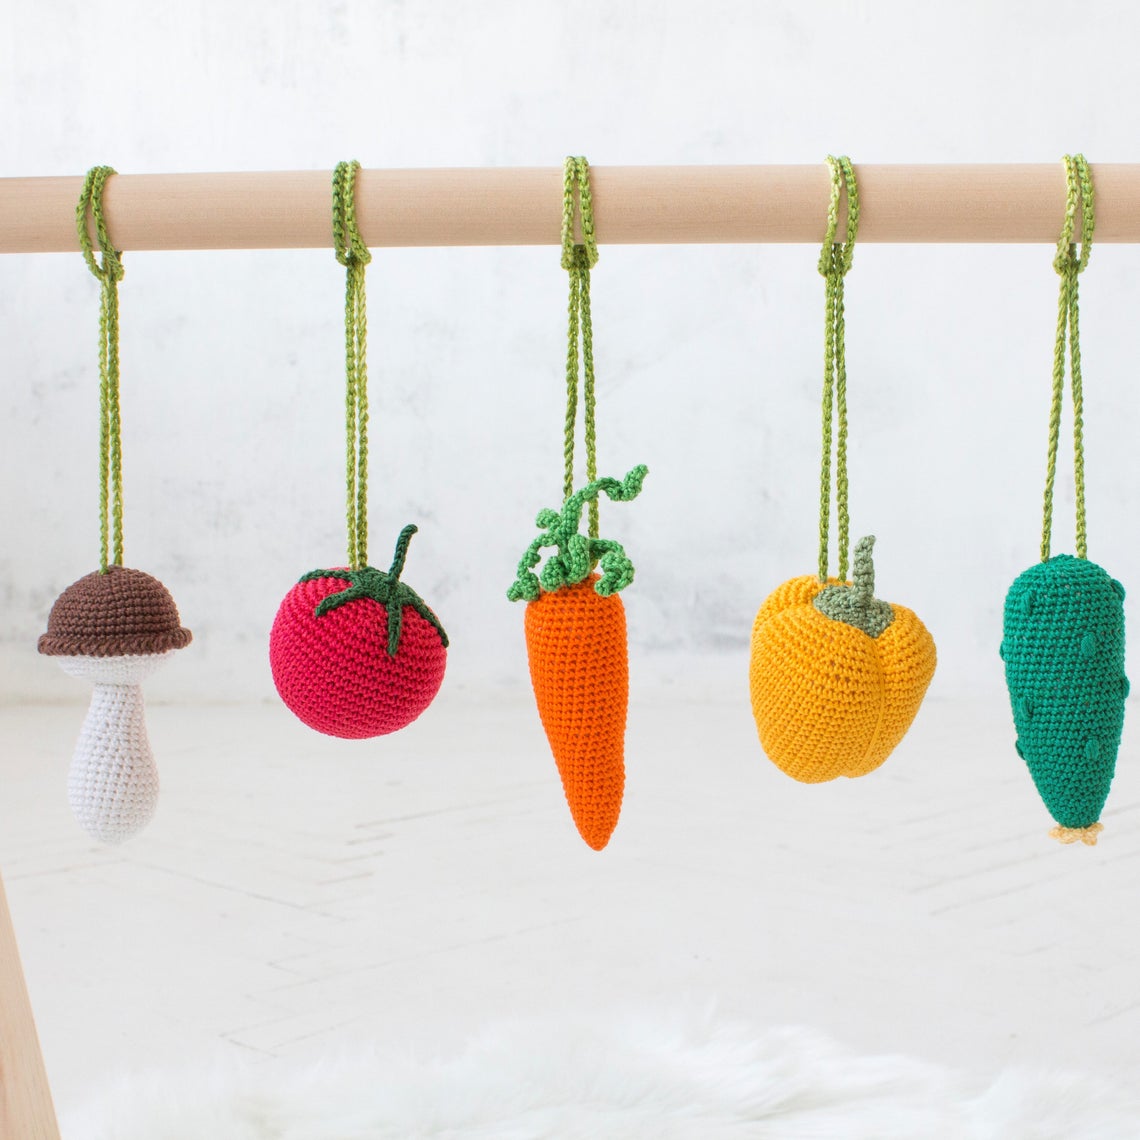 Vegetables Baby Gym toys